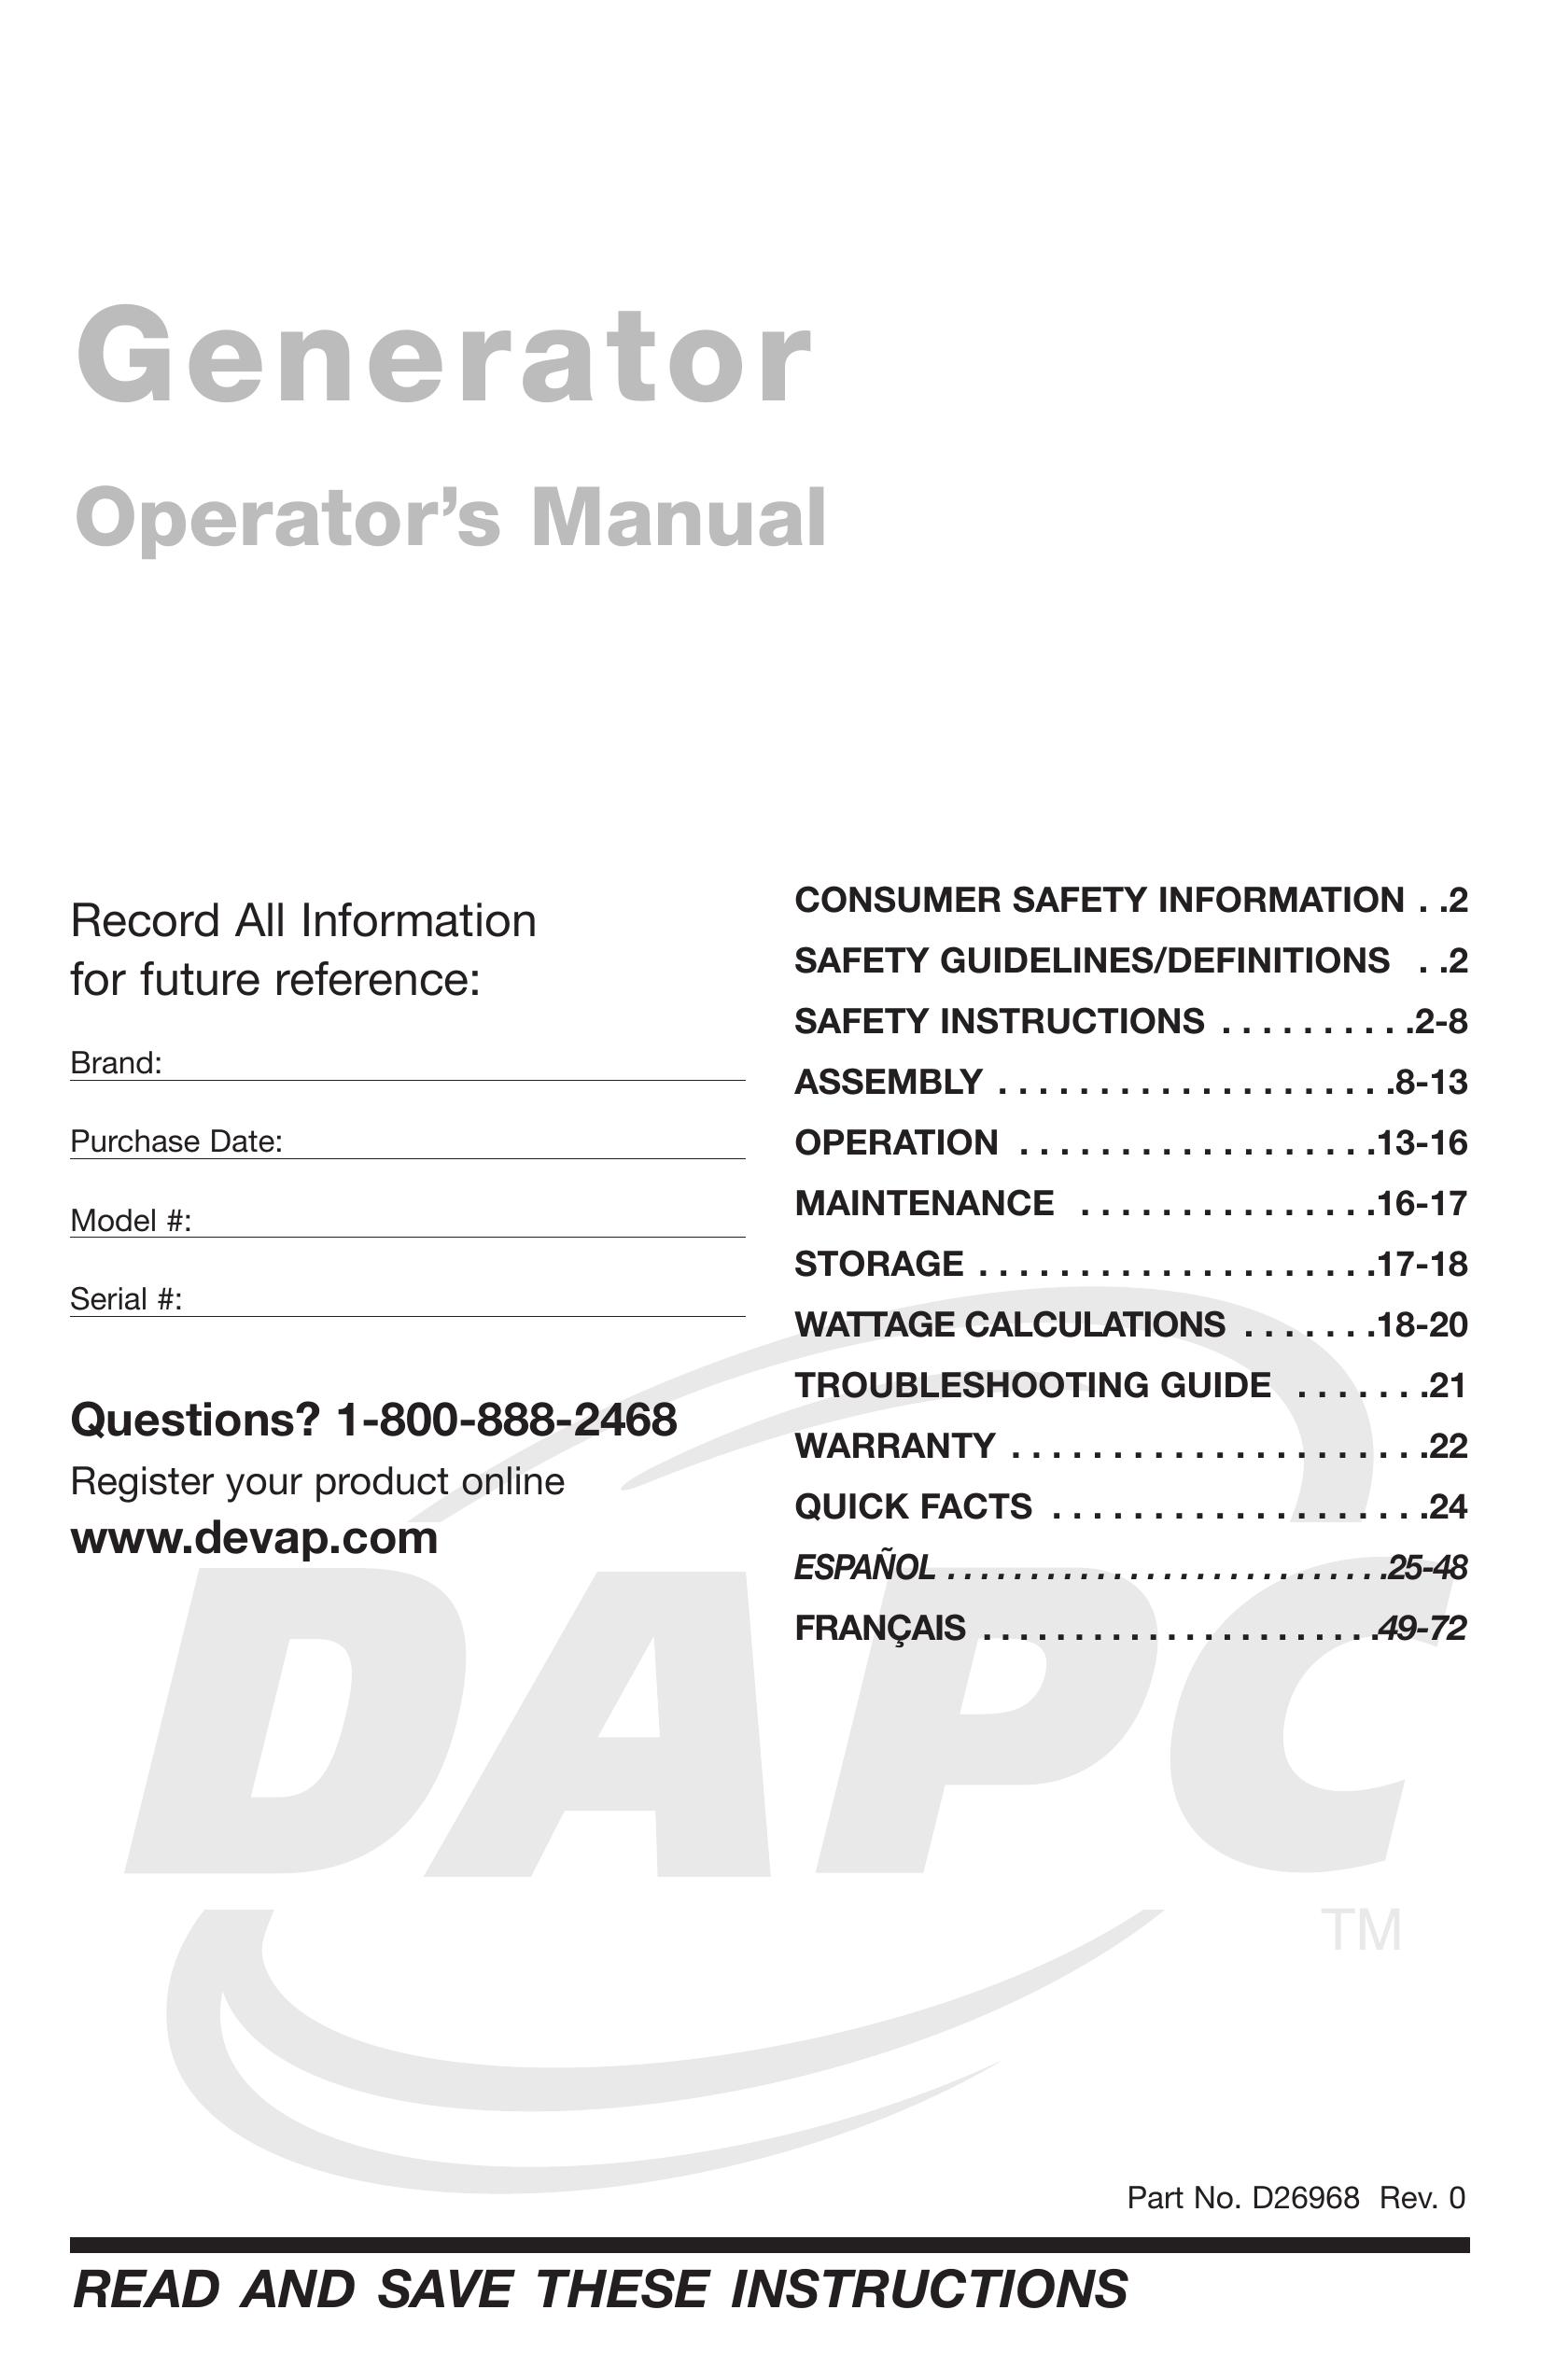 DeVillbiss Air Power Company D26968 Portable Generator User Manual